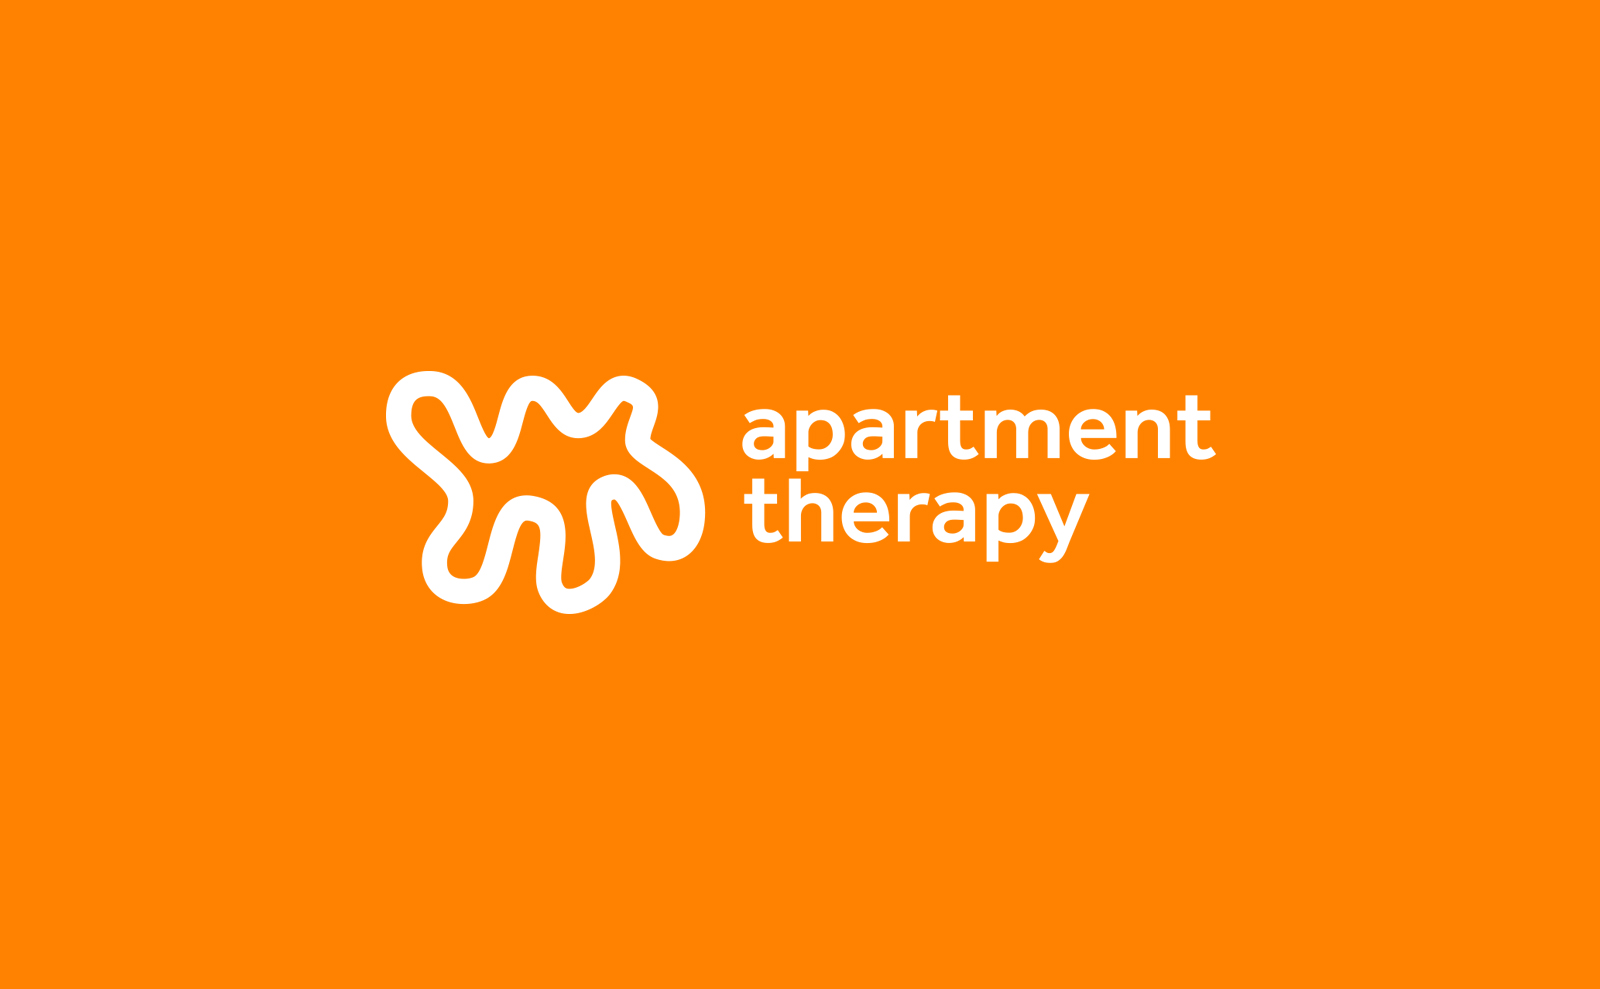 Apartment Therapy logo